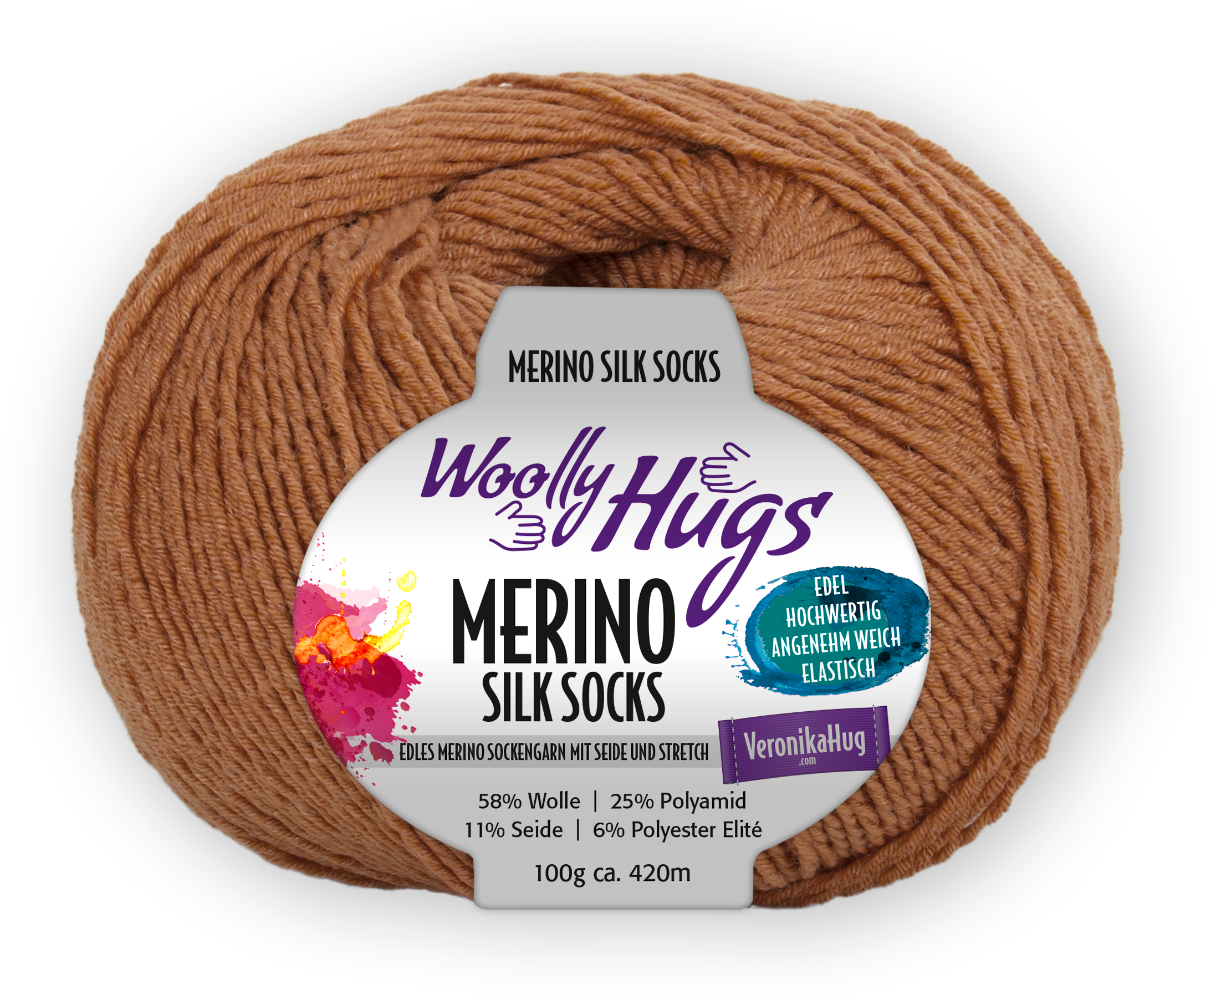 Merino Silk Socks Stretch, 4-fach von Woolly Hugs 0208 - camel